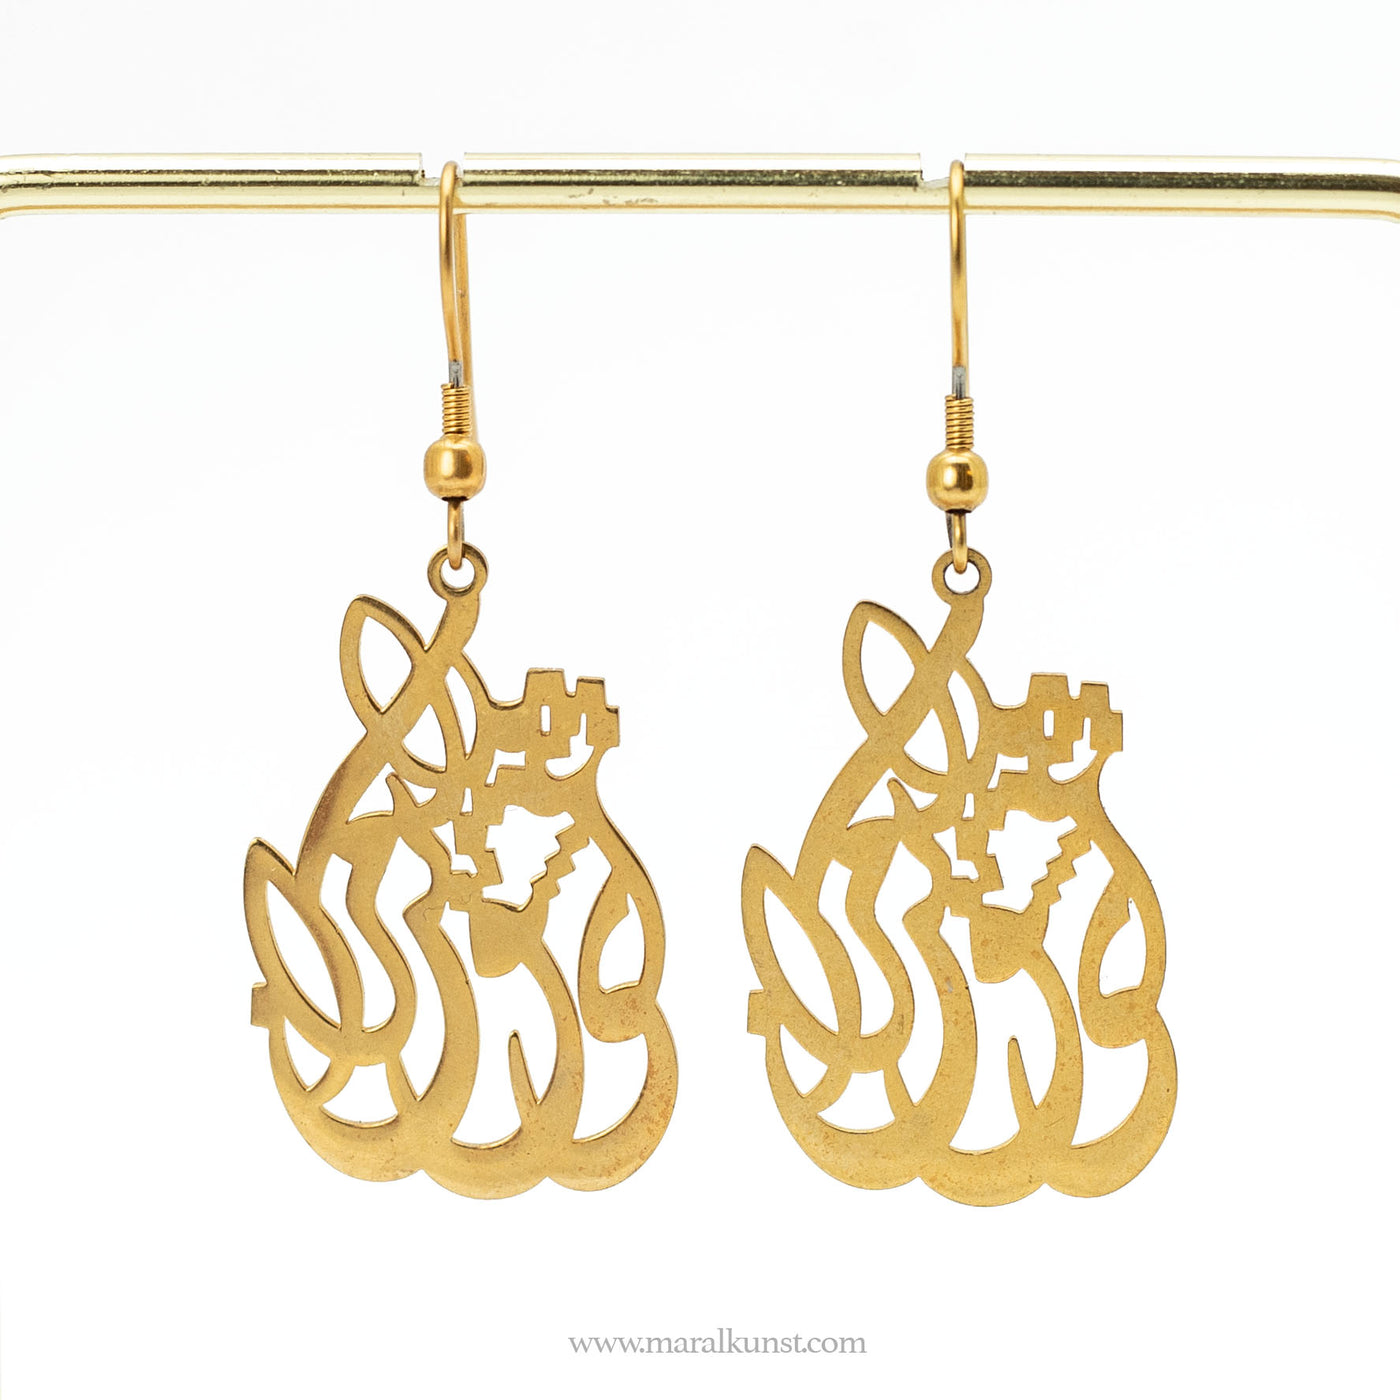 Persian poem earrings